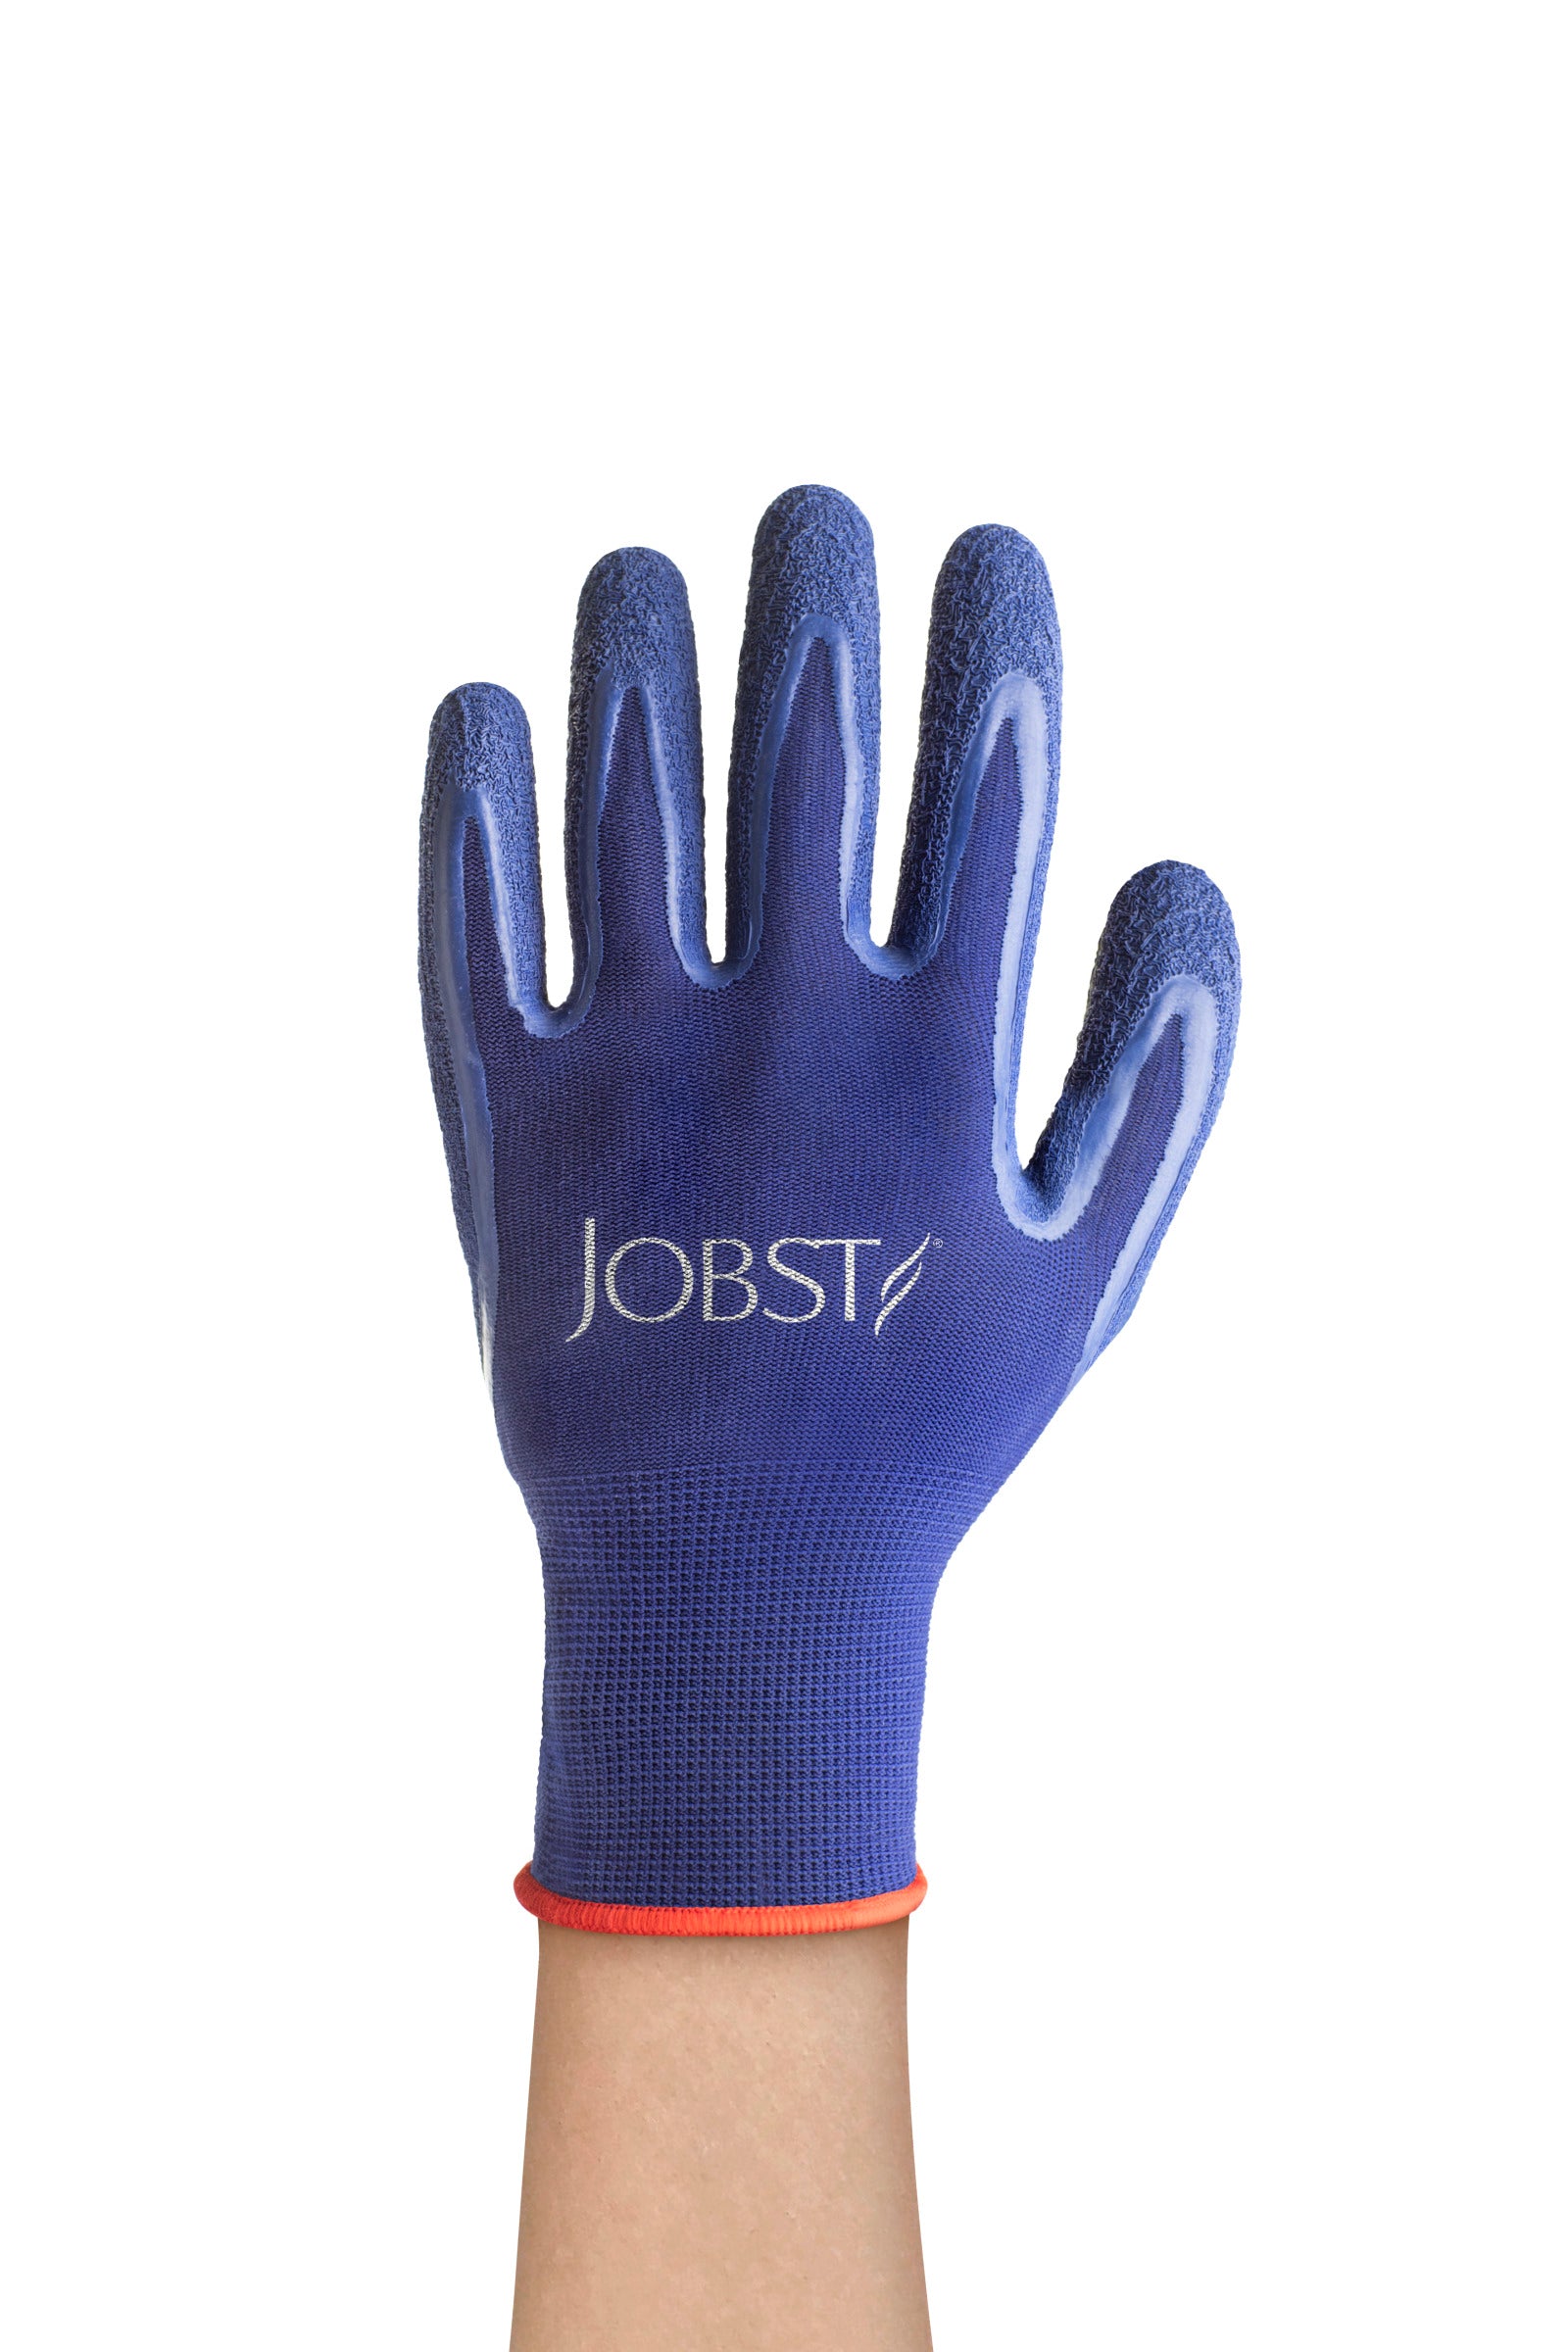 JOBST Donning Glove Latex W/JOBST Logo Blue Large